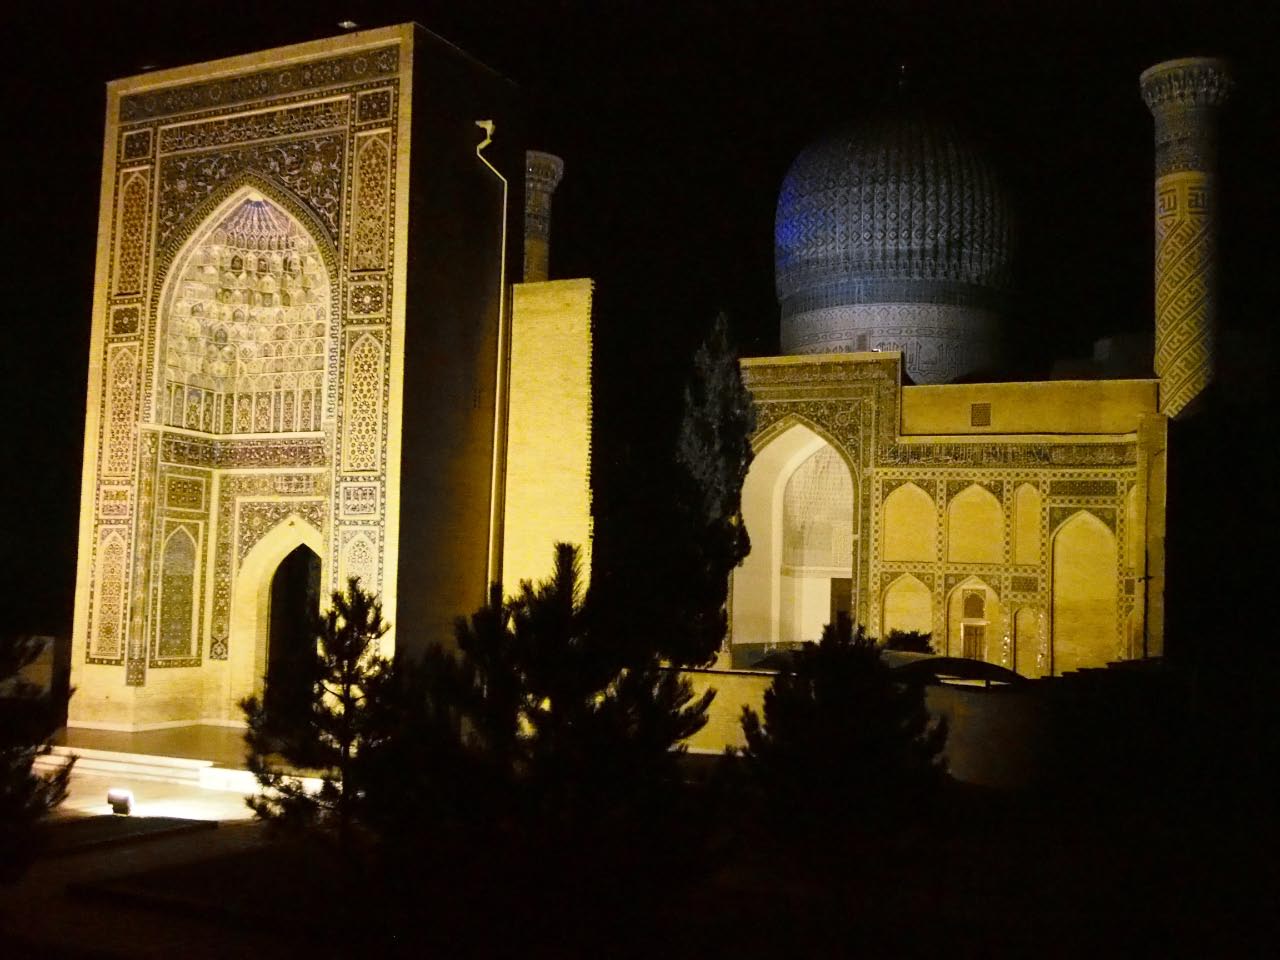 Samarkand: tombeau de Tamerlan. en Ouzbékistan Sunnite, et des monuments d'inspiration Iranienne (Chiite)